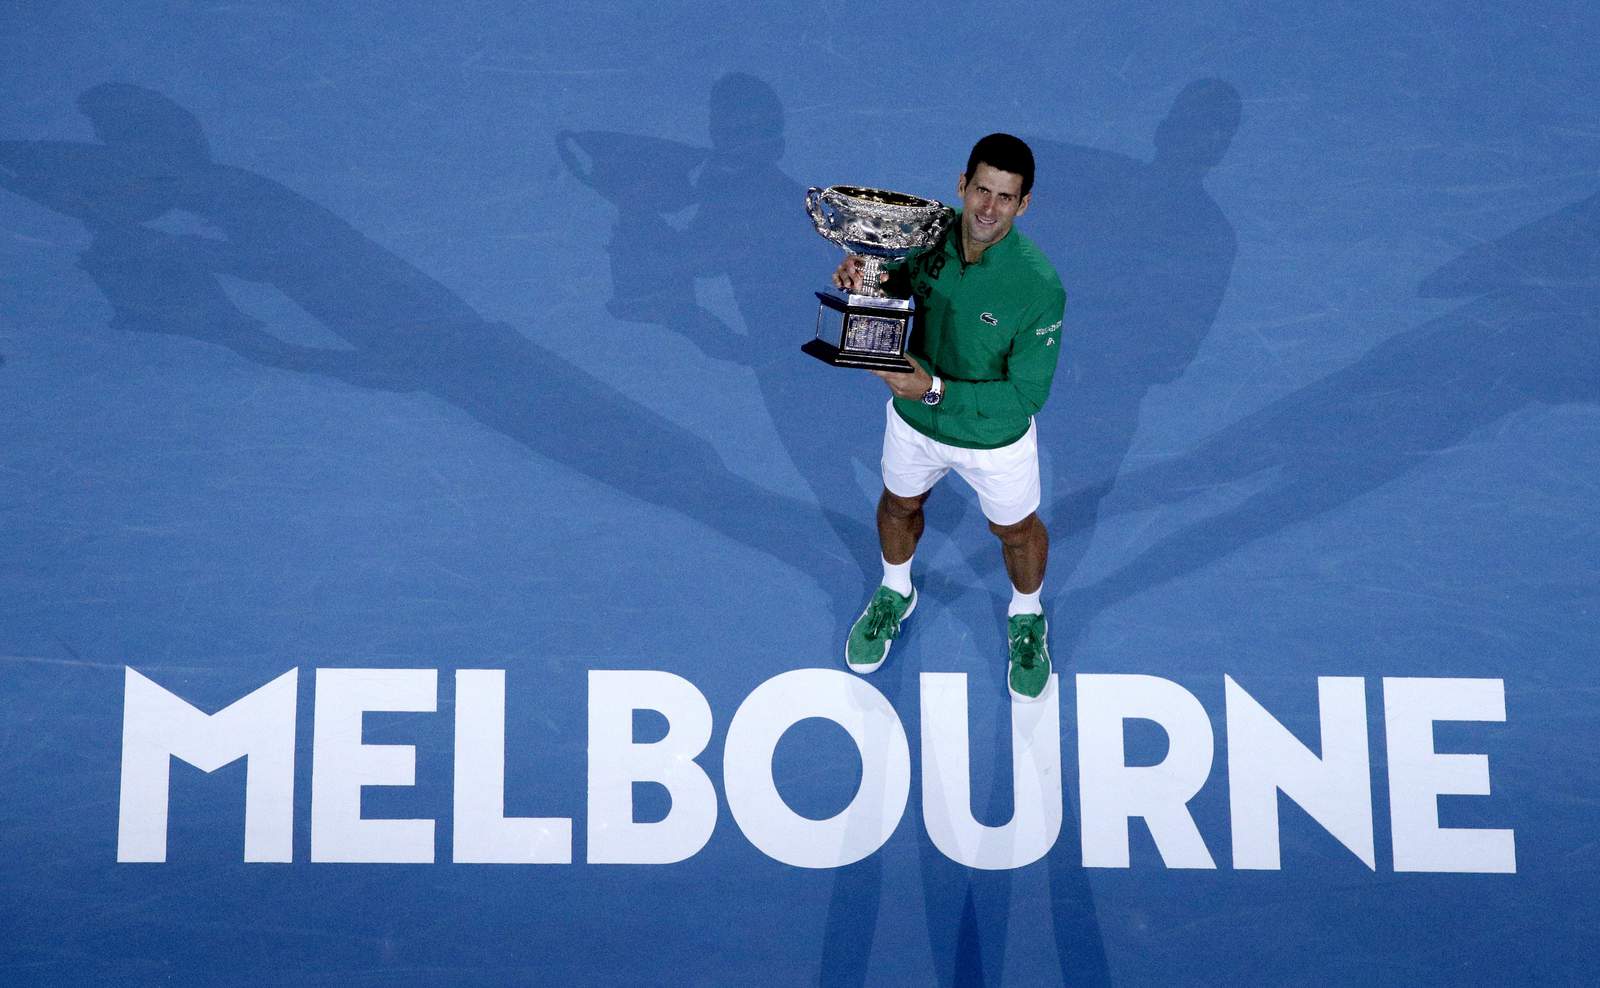 ATP: Start of 2021 calendar includes delayed Australian Open